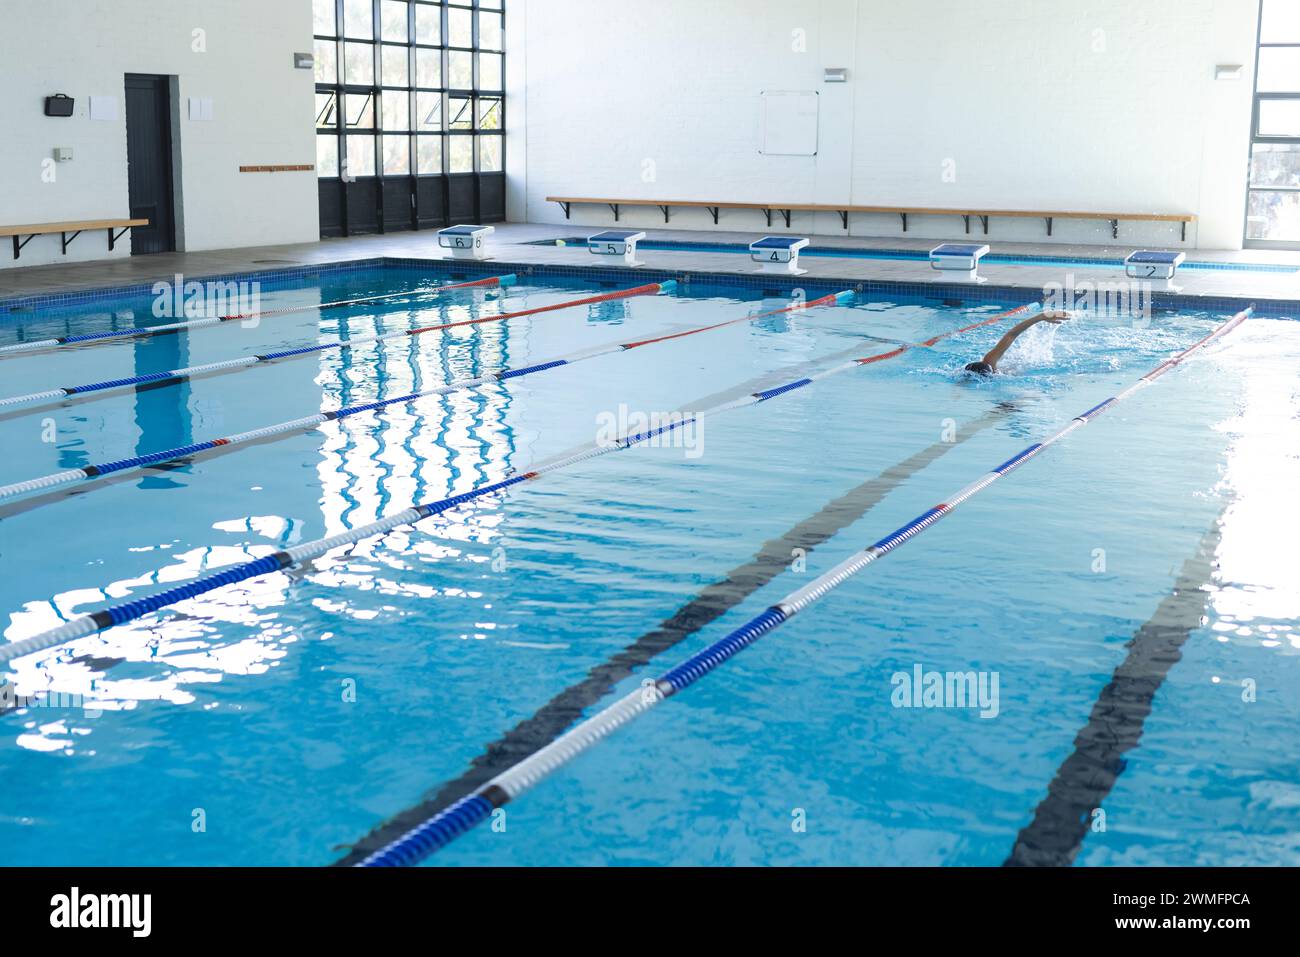 Un nuotatore pratica in una piscina coperta presso una struttura sportiva Foto Stock